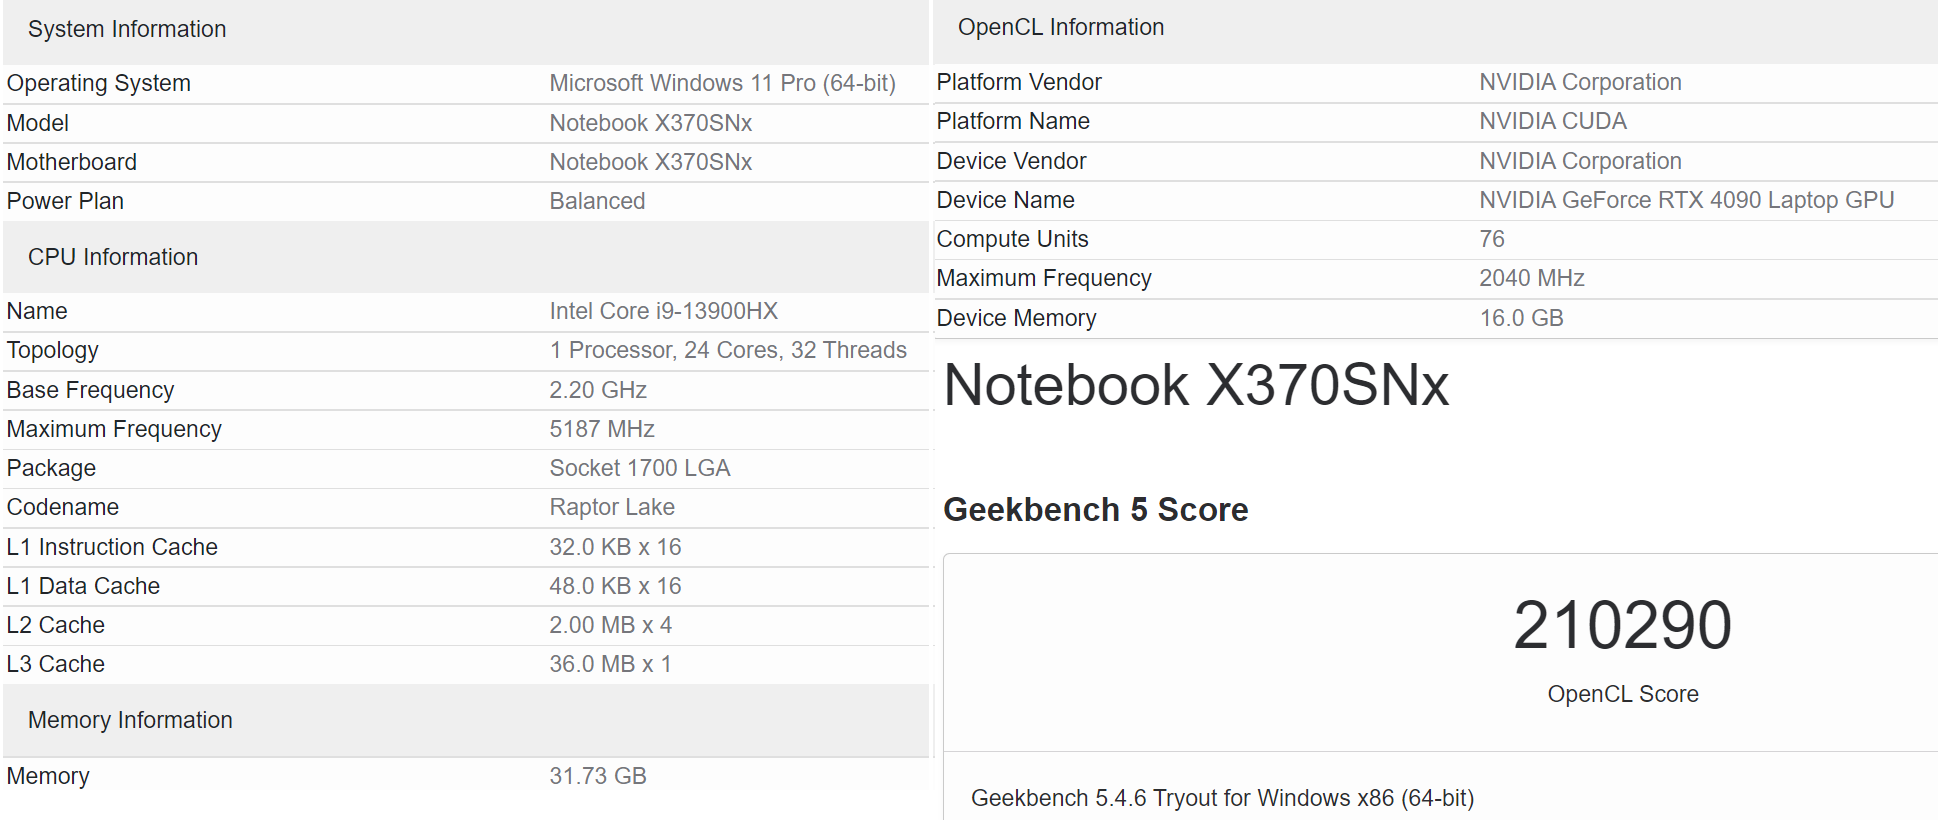 nvidia rtx4090 laptop gpu spec เผยสเปกการ์ดจอ NVIDIA GeForce RTX 4090 Laptop รุ่นแล็ปท็อปมีจำนวนคอร์ 9728 CUDA cores ซึ่งเร็วกว่า RTX 3090 รุ่นเดสก์ท็อป